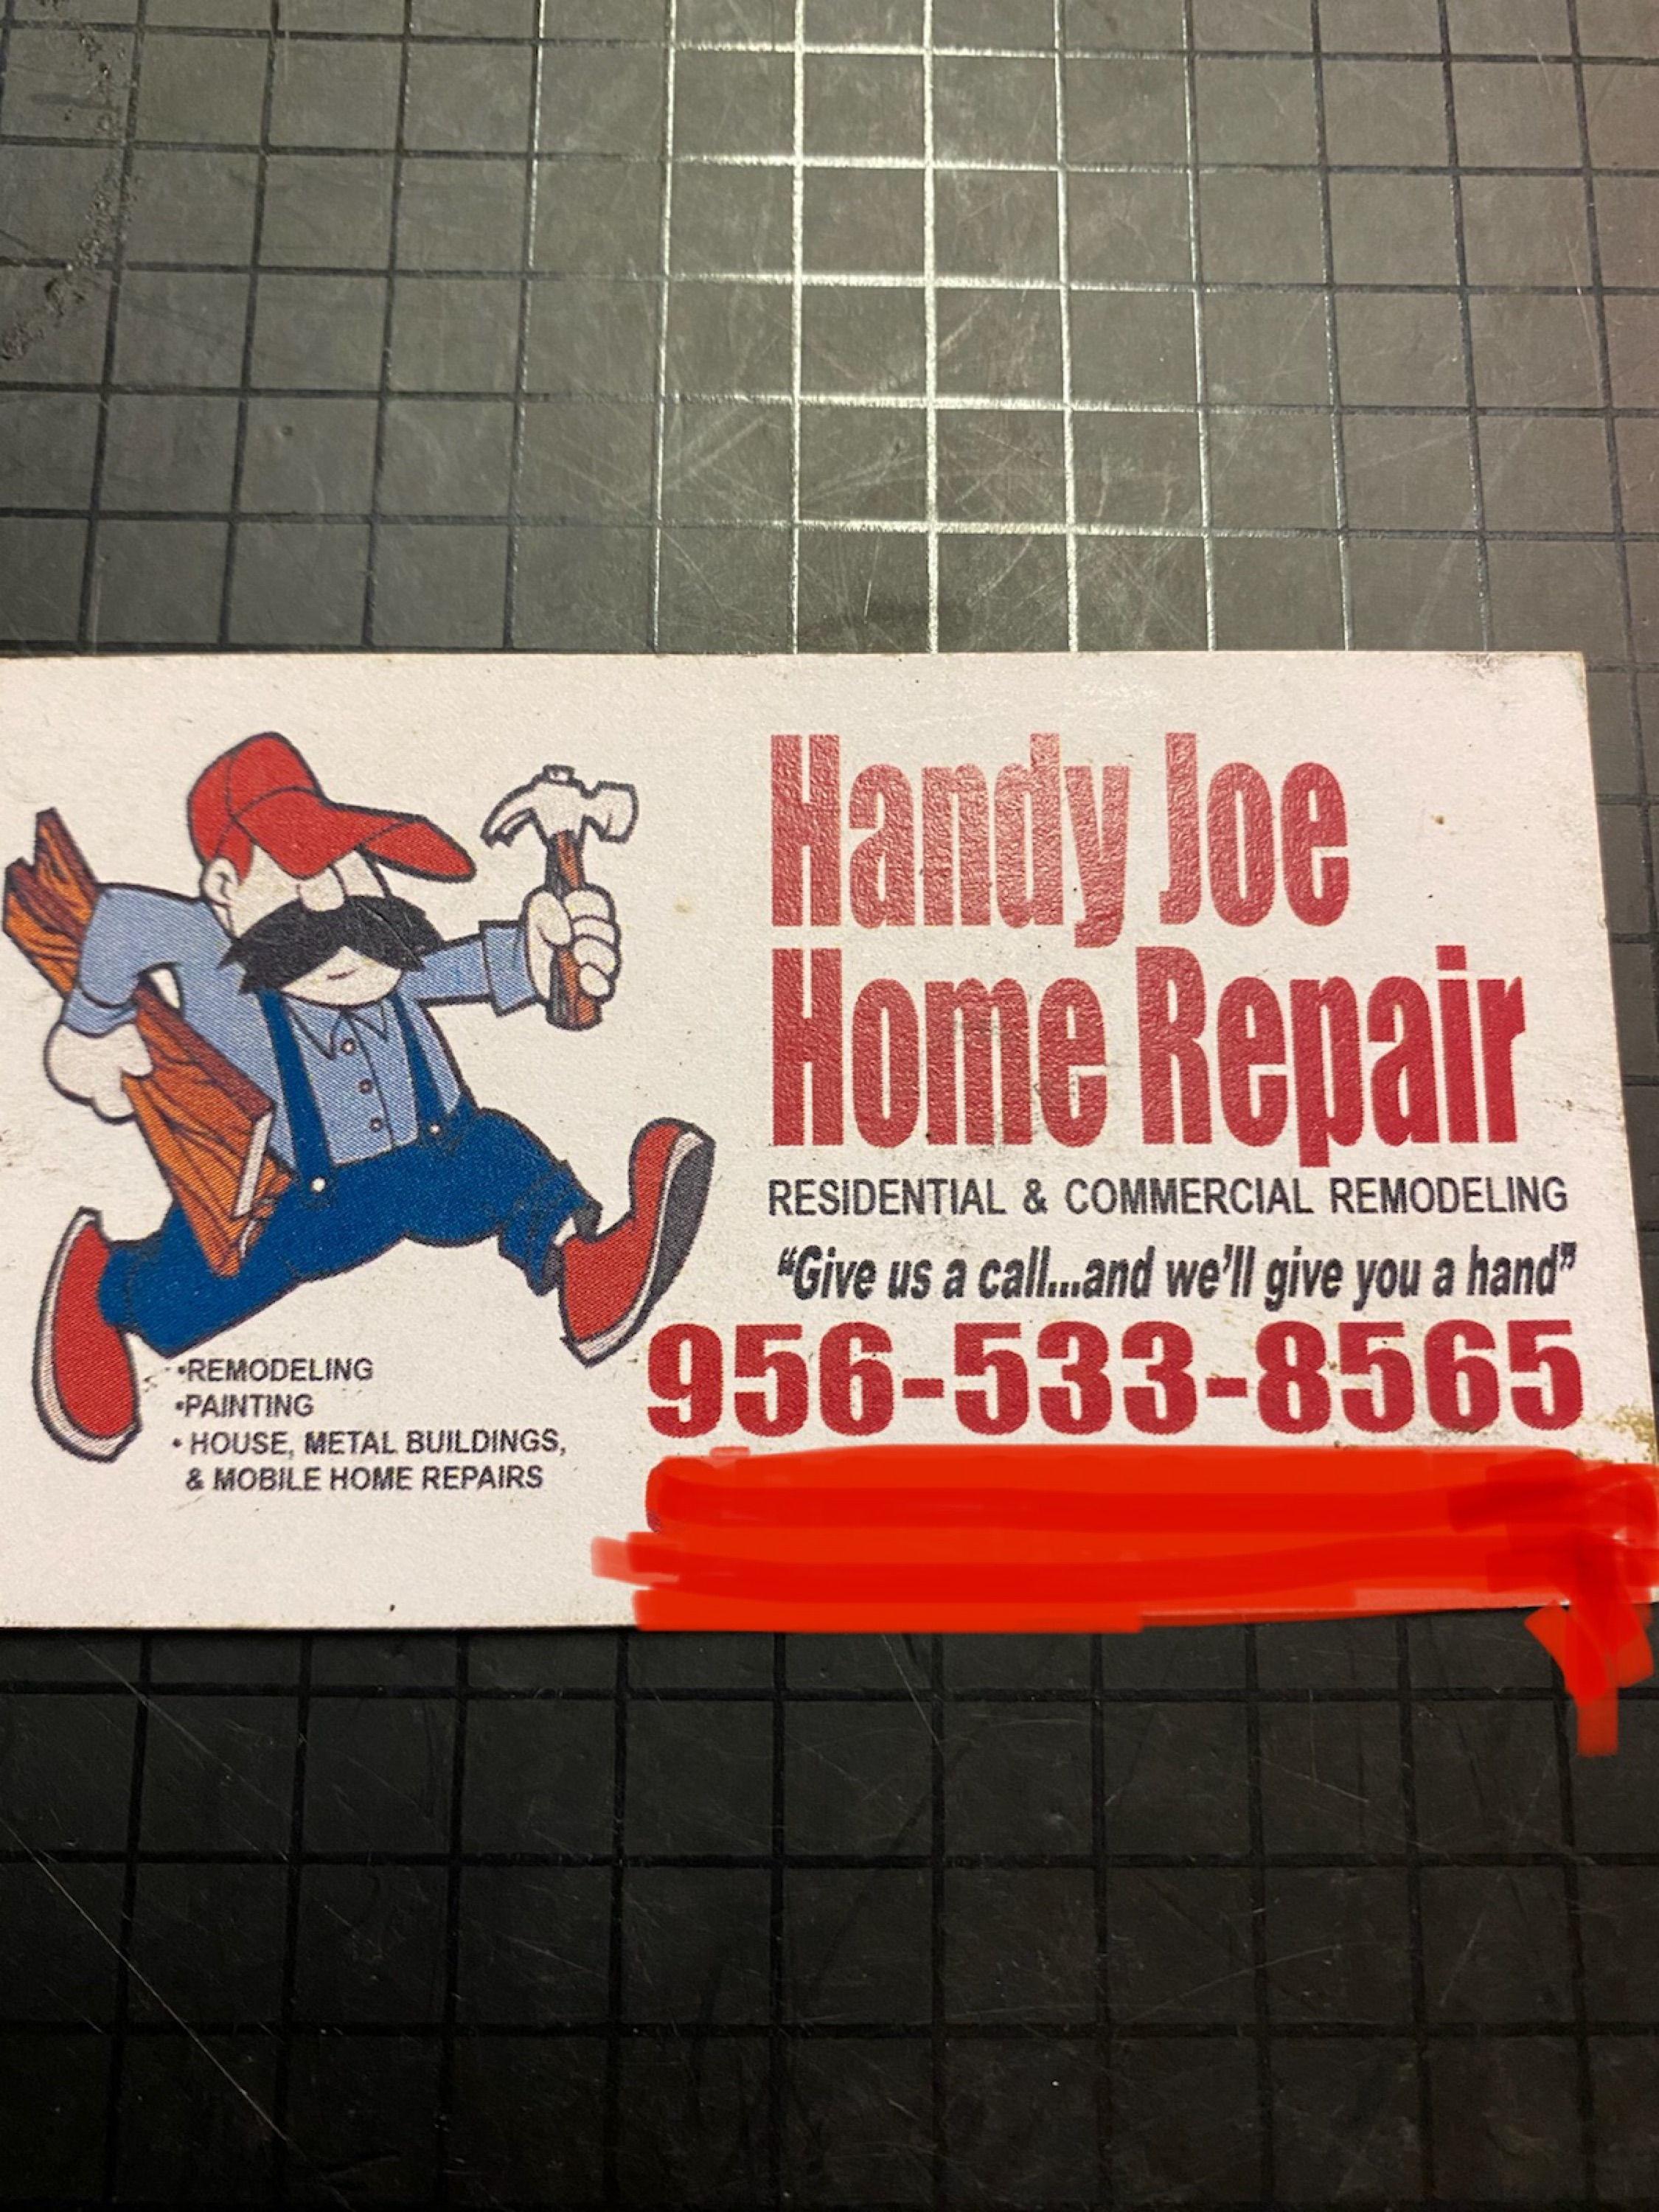 Handy Joe Home Repairs Logo